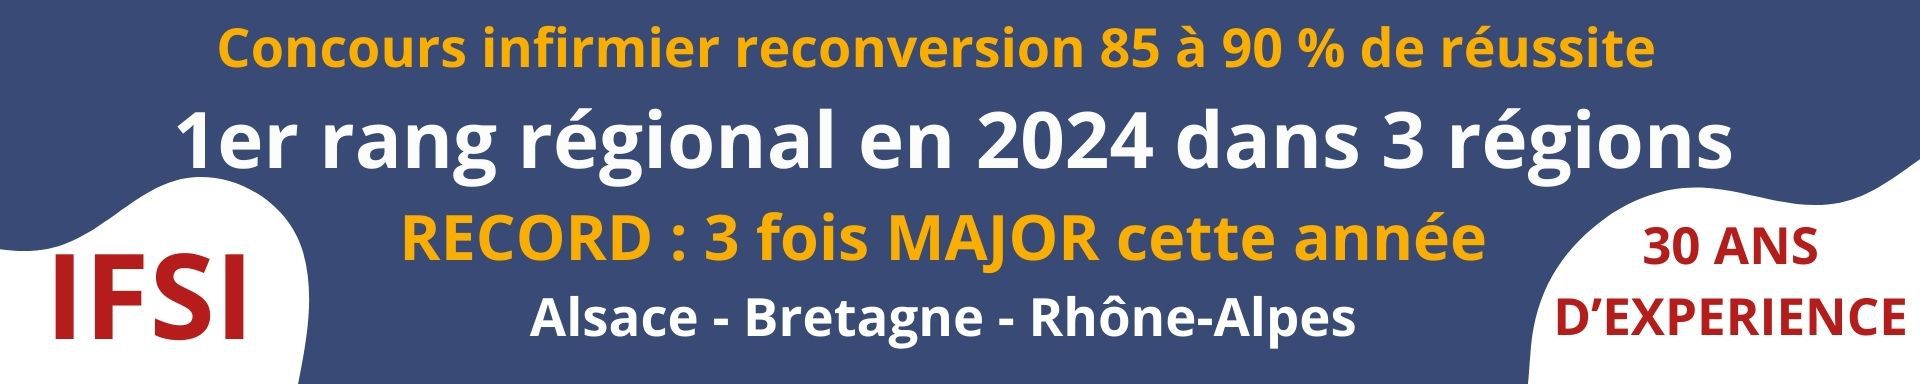 sujet ifsi Nantes 2024